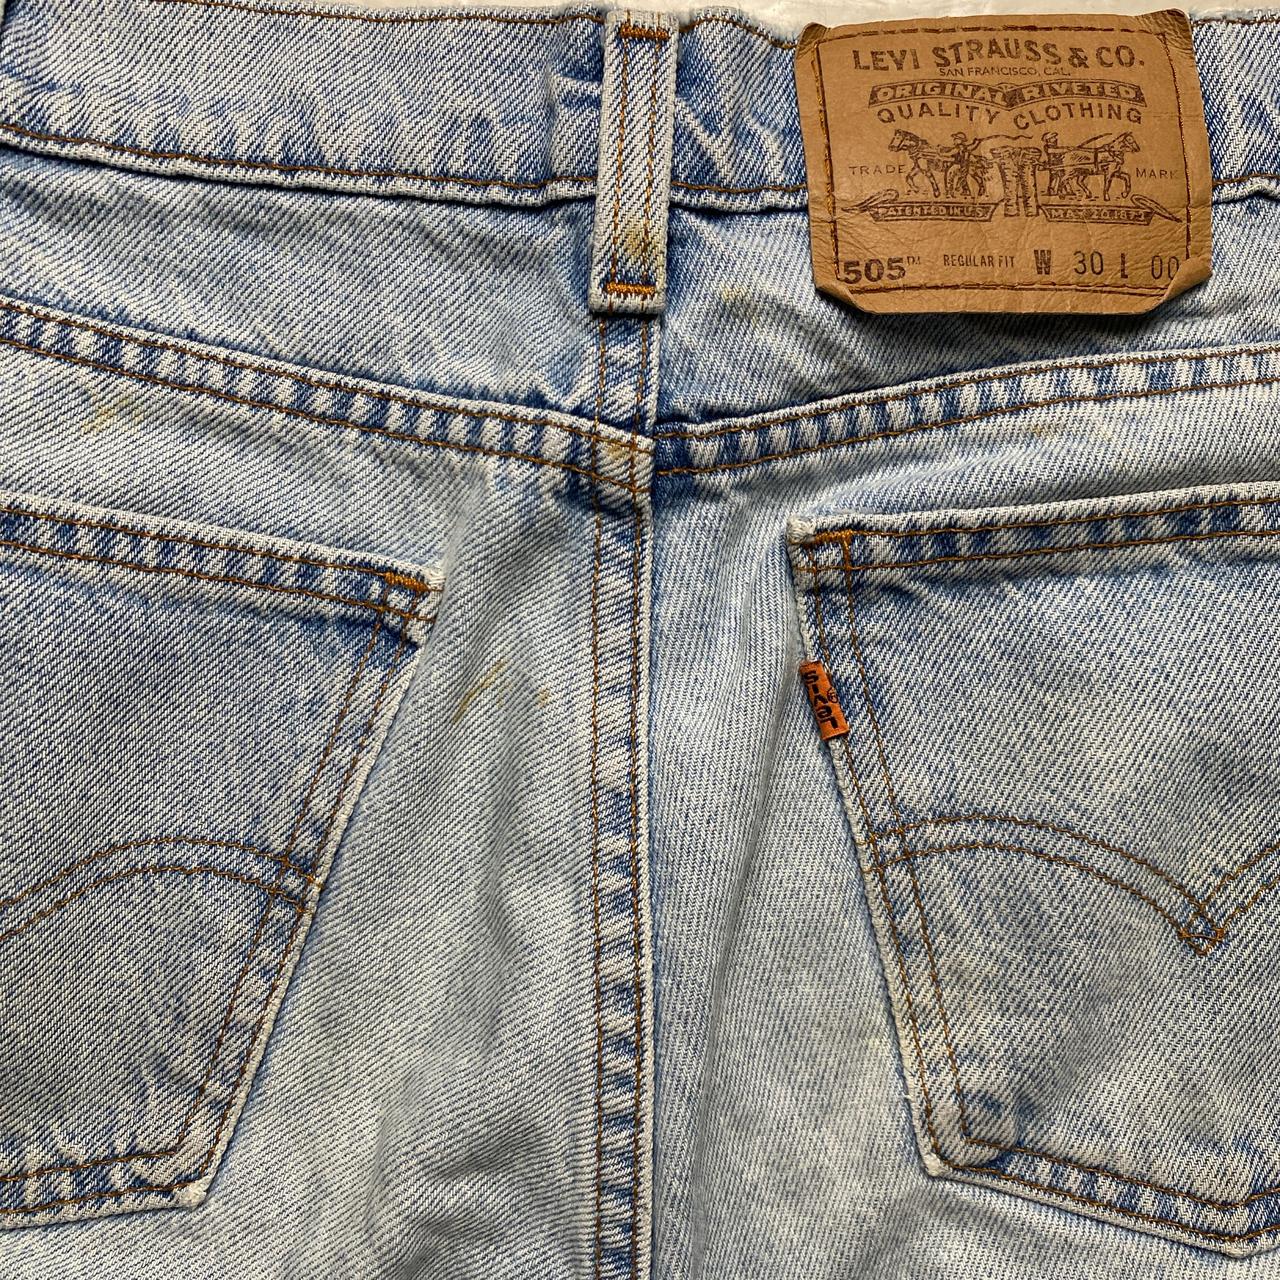 Levis 505 Vintage Stonewash Light Blue Denim Jort Jean Shorts